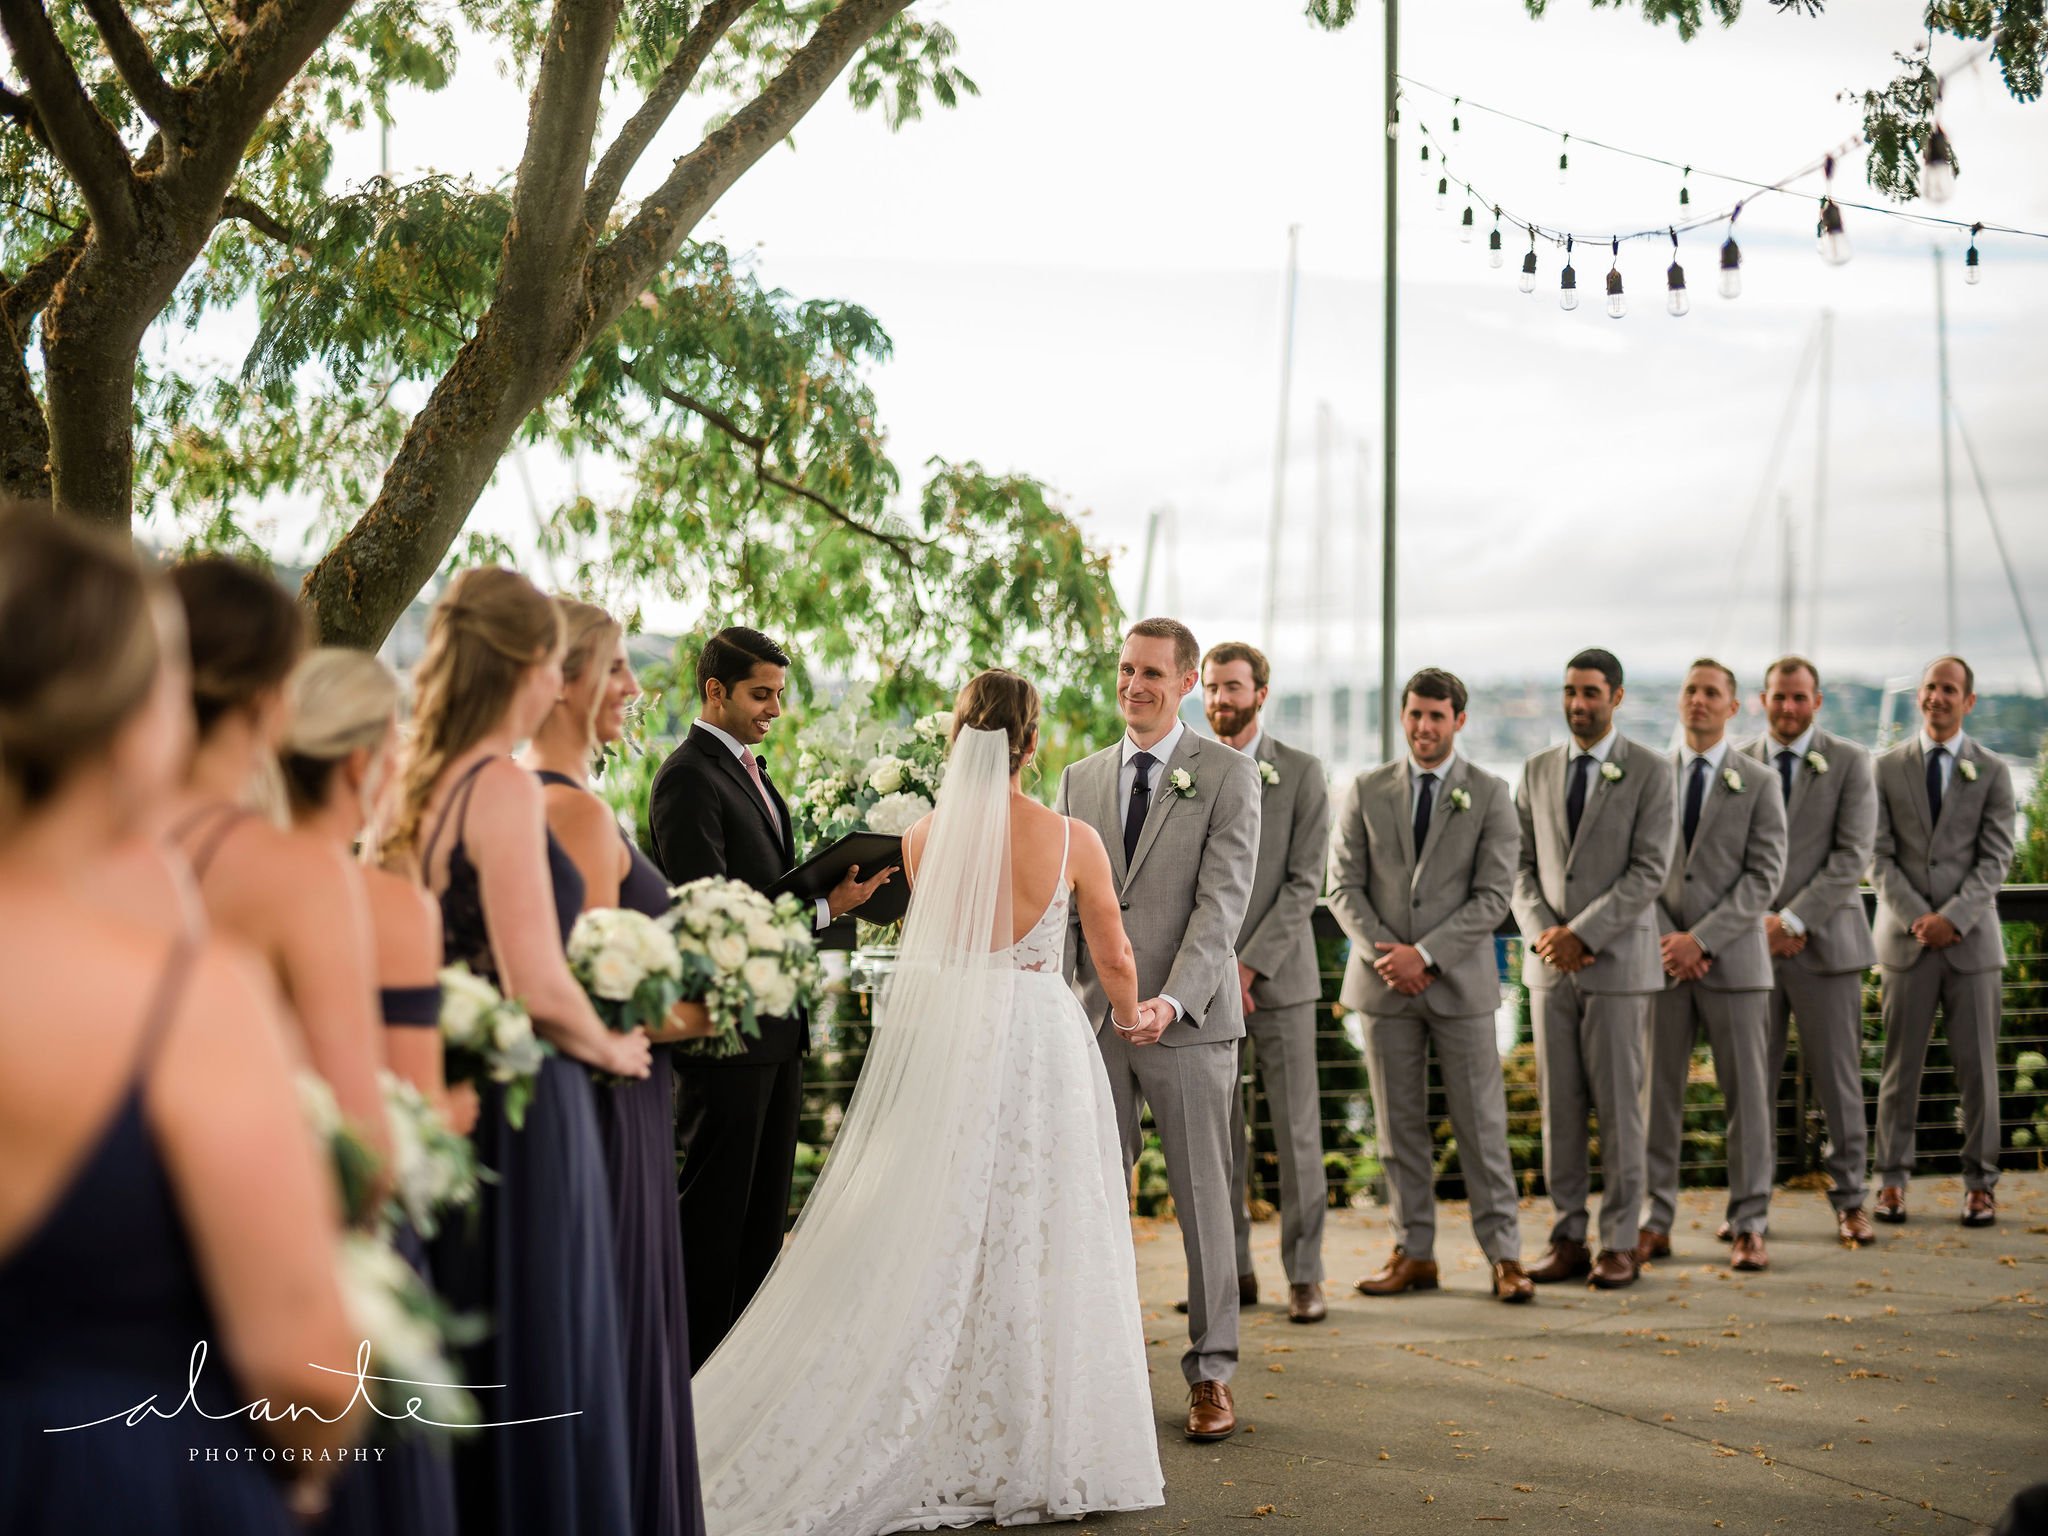 Alante-Photography-Seattle-Washington-Wedding-Dockside-Dukes-Lake-Union-124.jpg